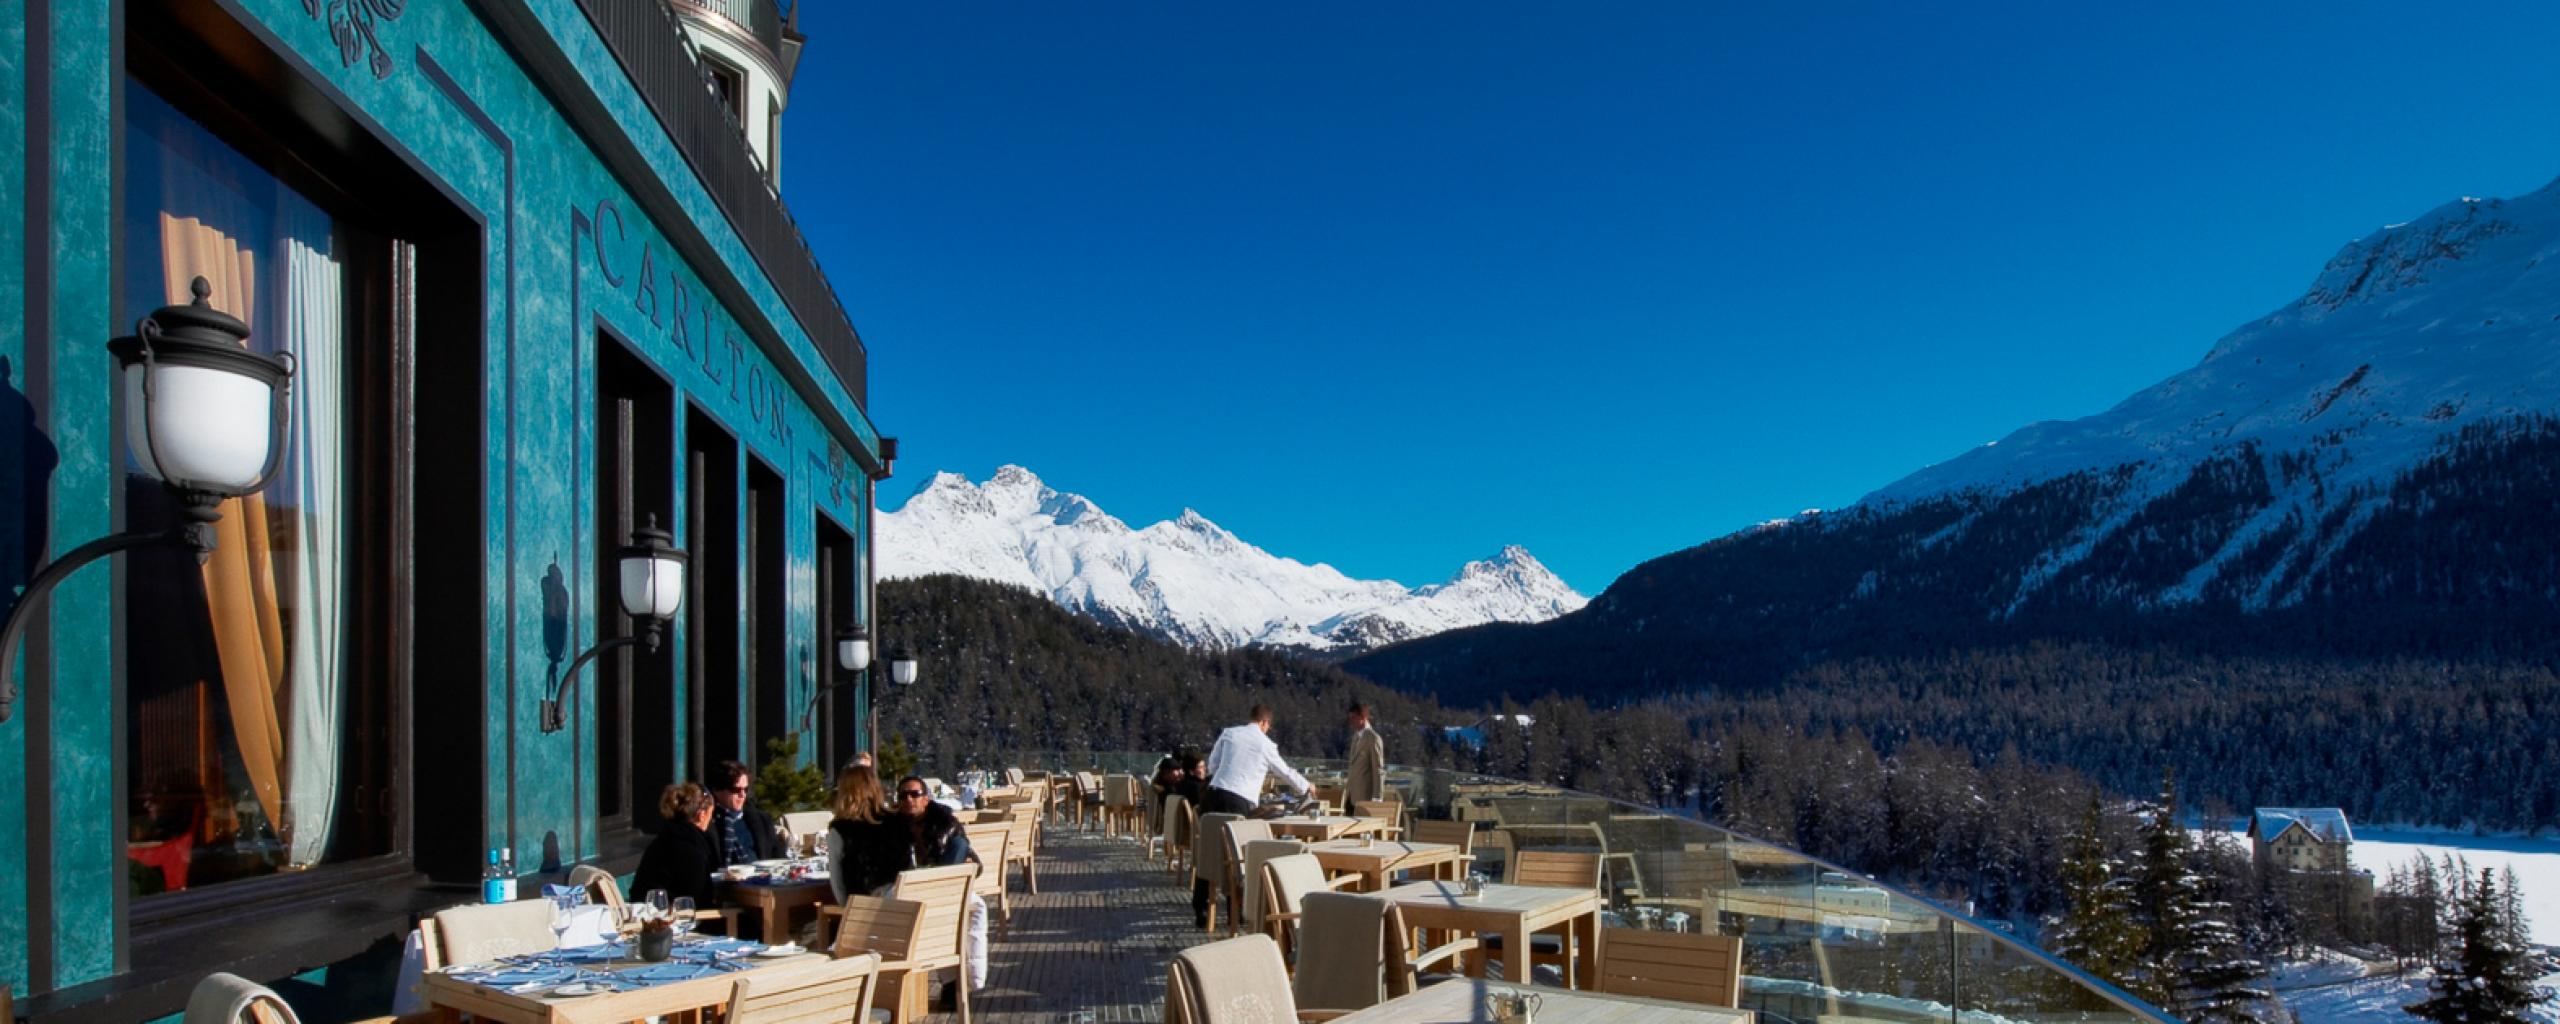 Carlton Hotel - St. Moritz